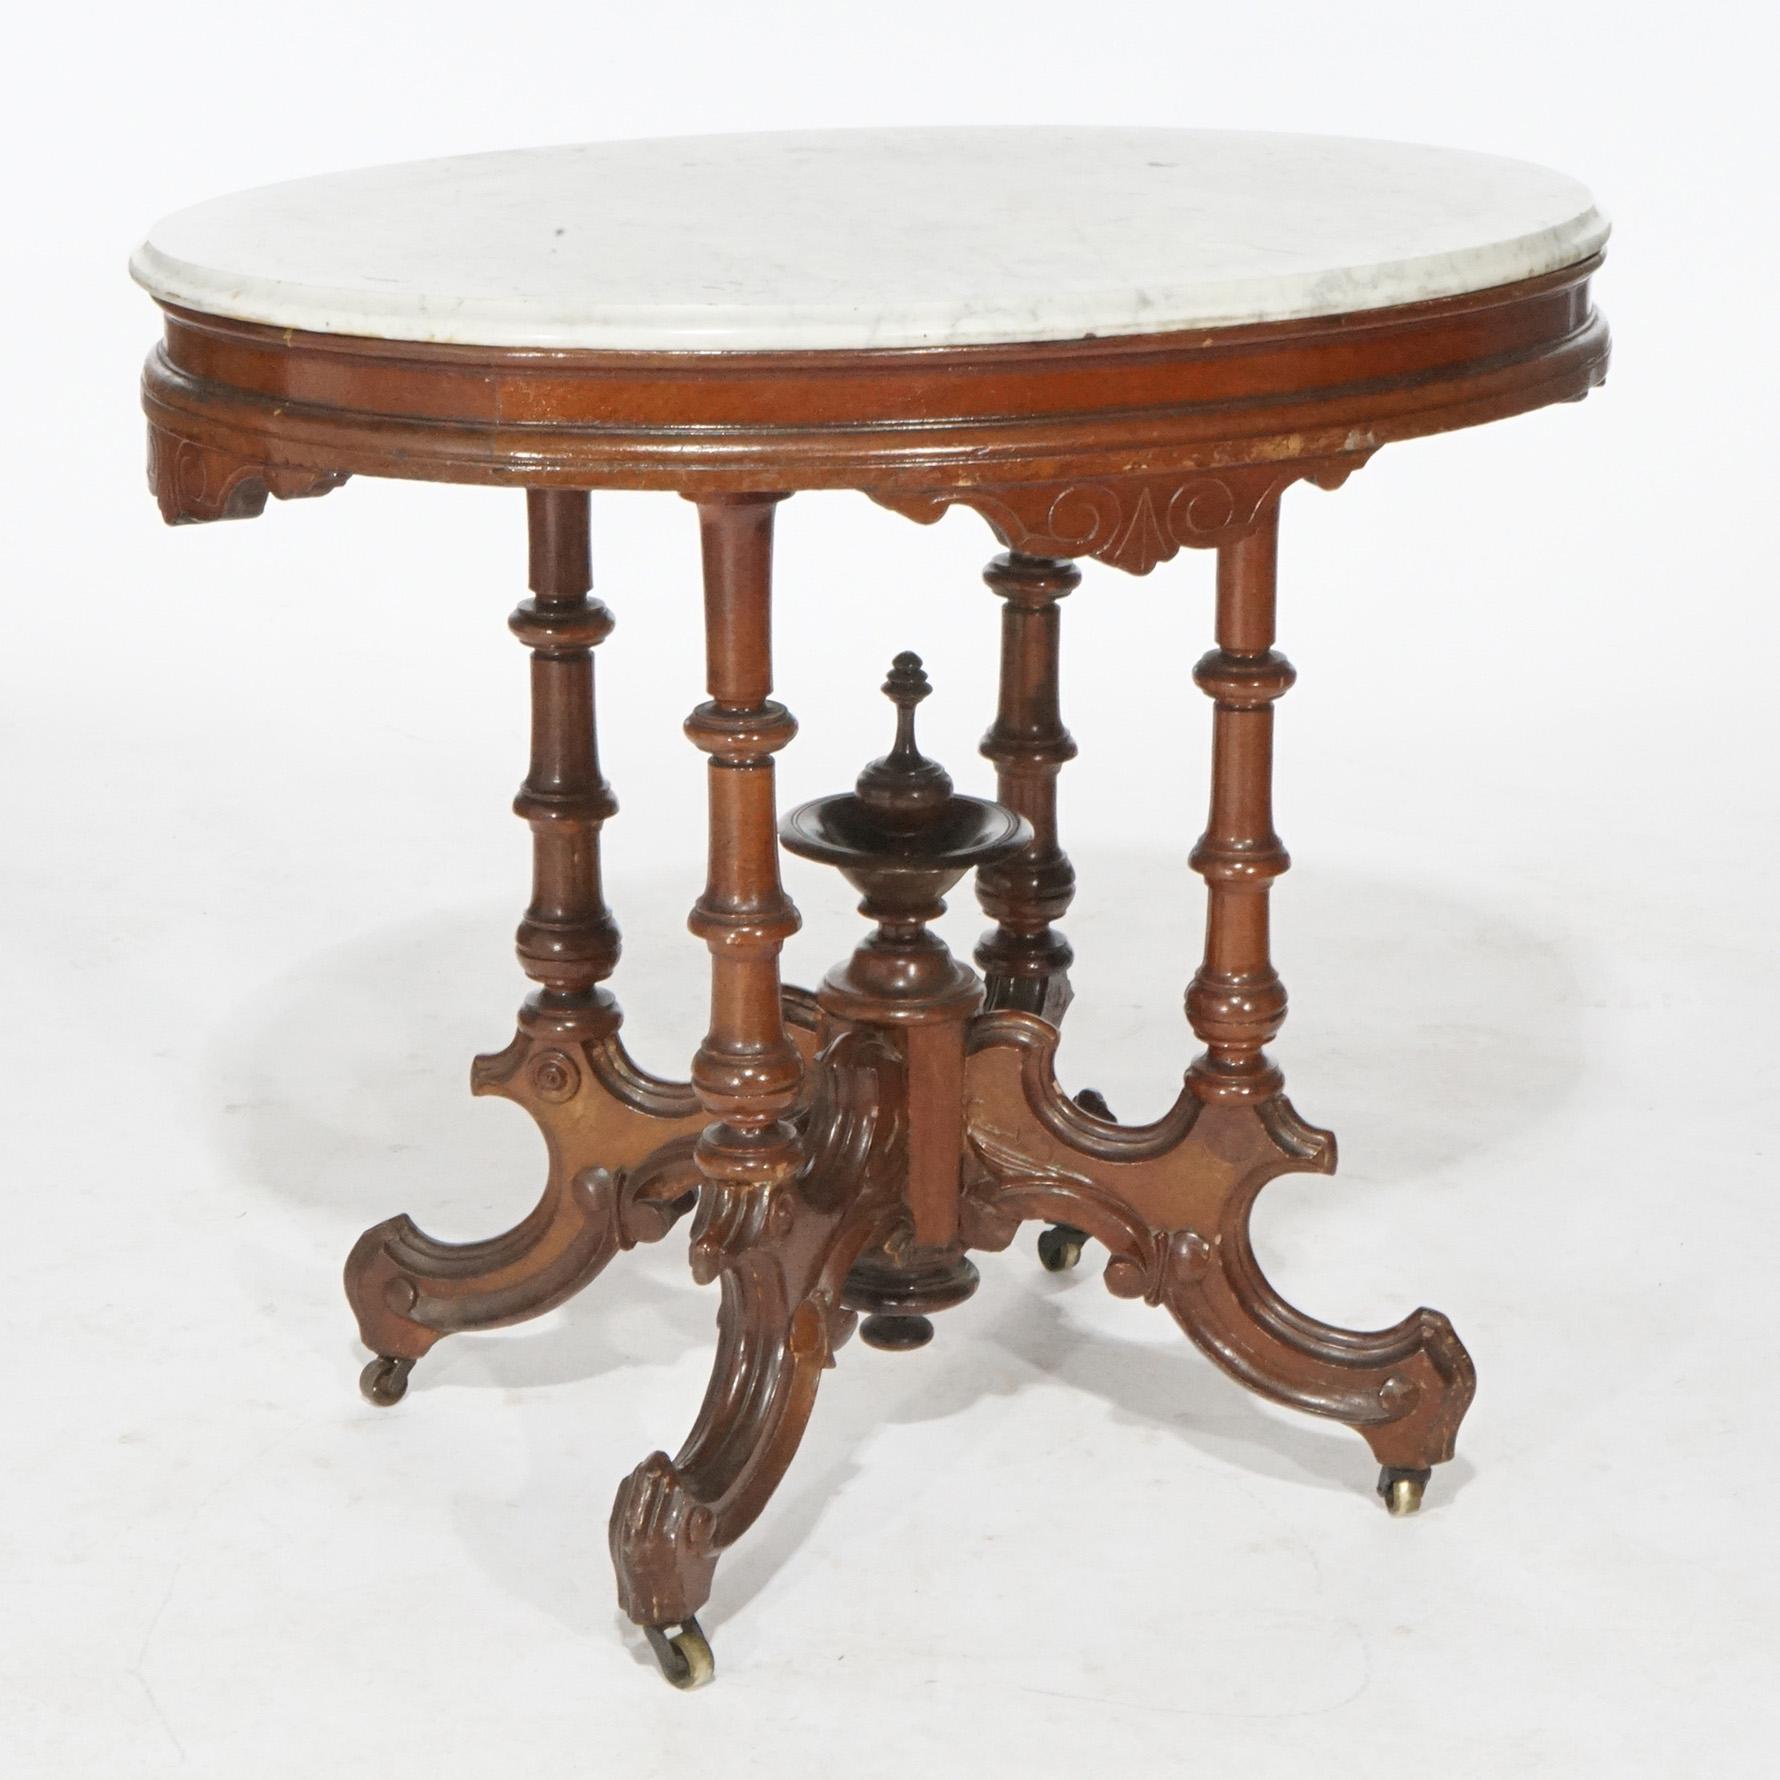 Antique Renaissance Revival Walnut Oval Marble Top Parlor Table, circa 1890 For Sale 1